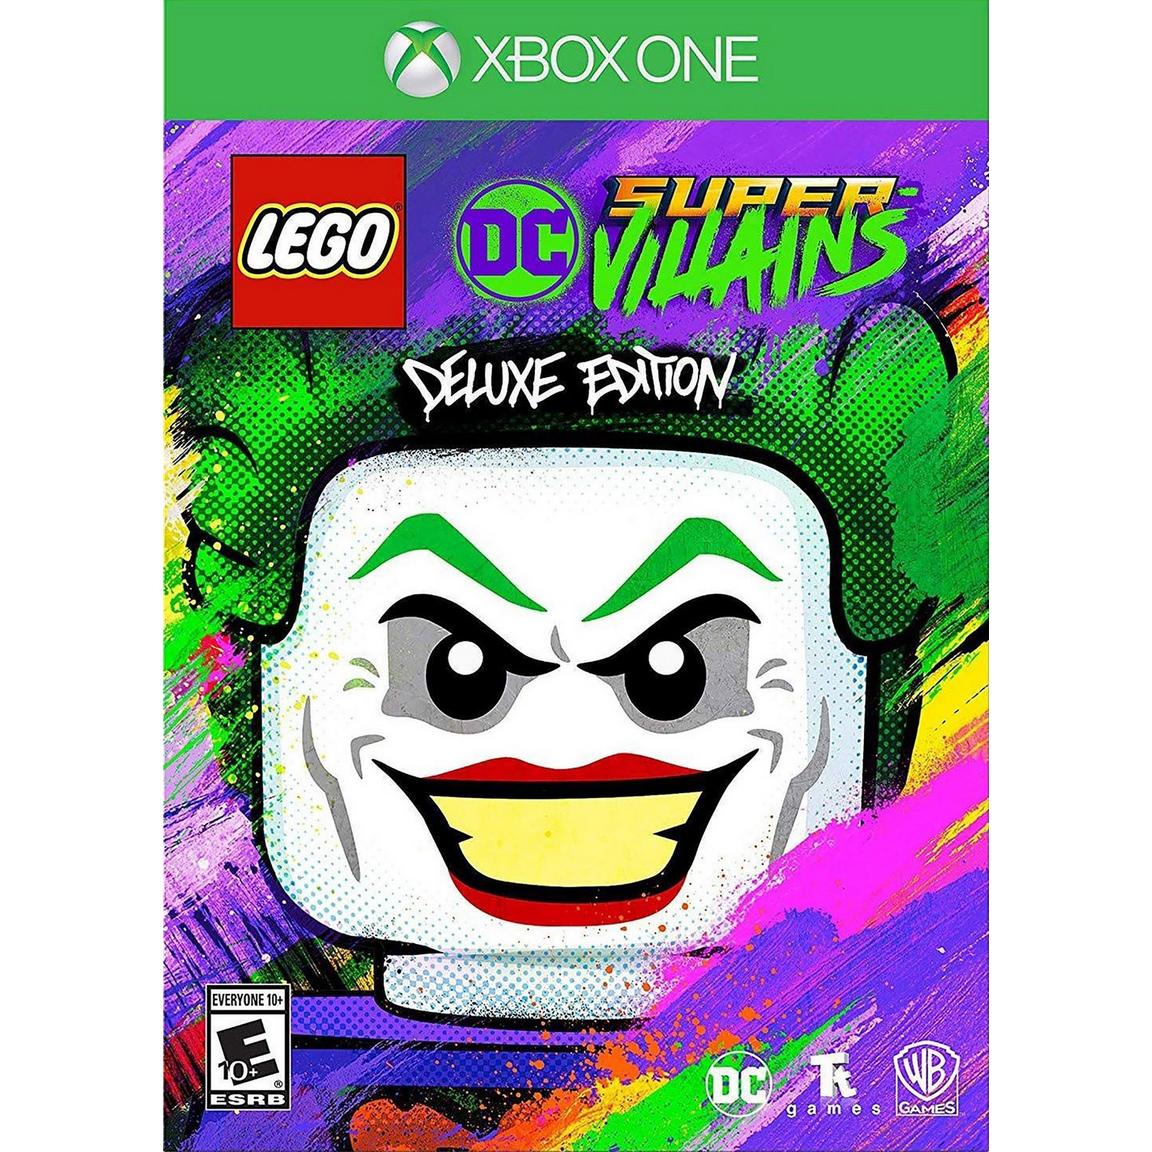 LEGO DC Super-Villains Deluxe Edition - Xbox One -  Warner Bros. Interactive Entertainment, G3Q-00521